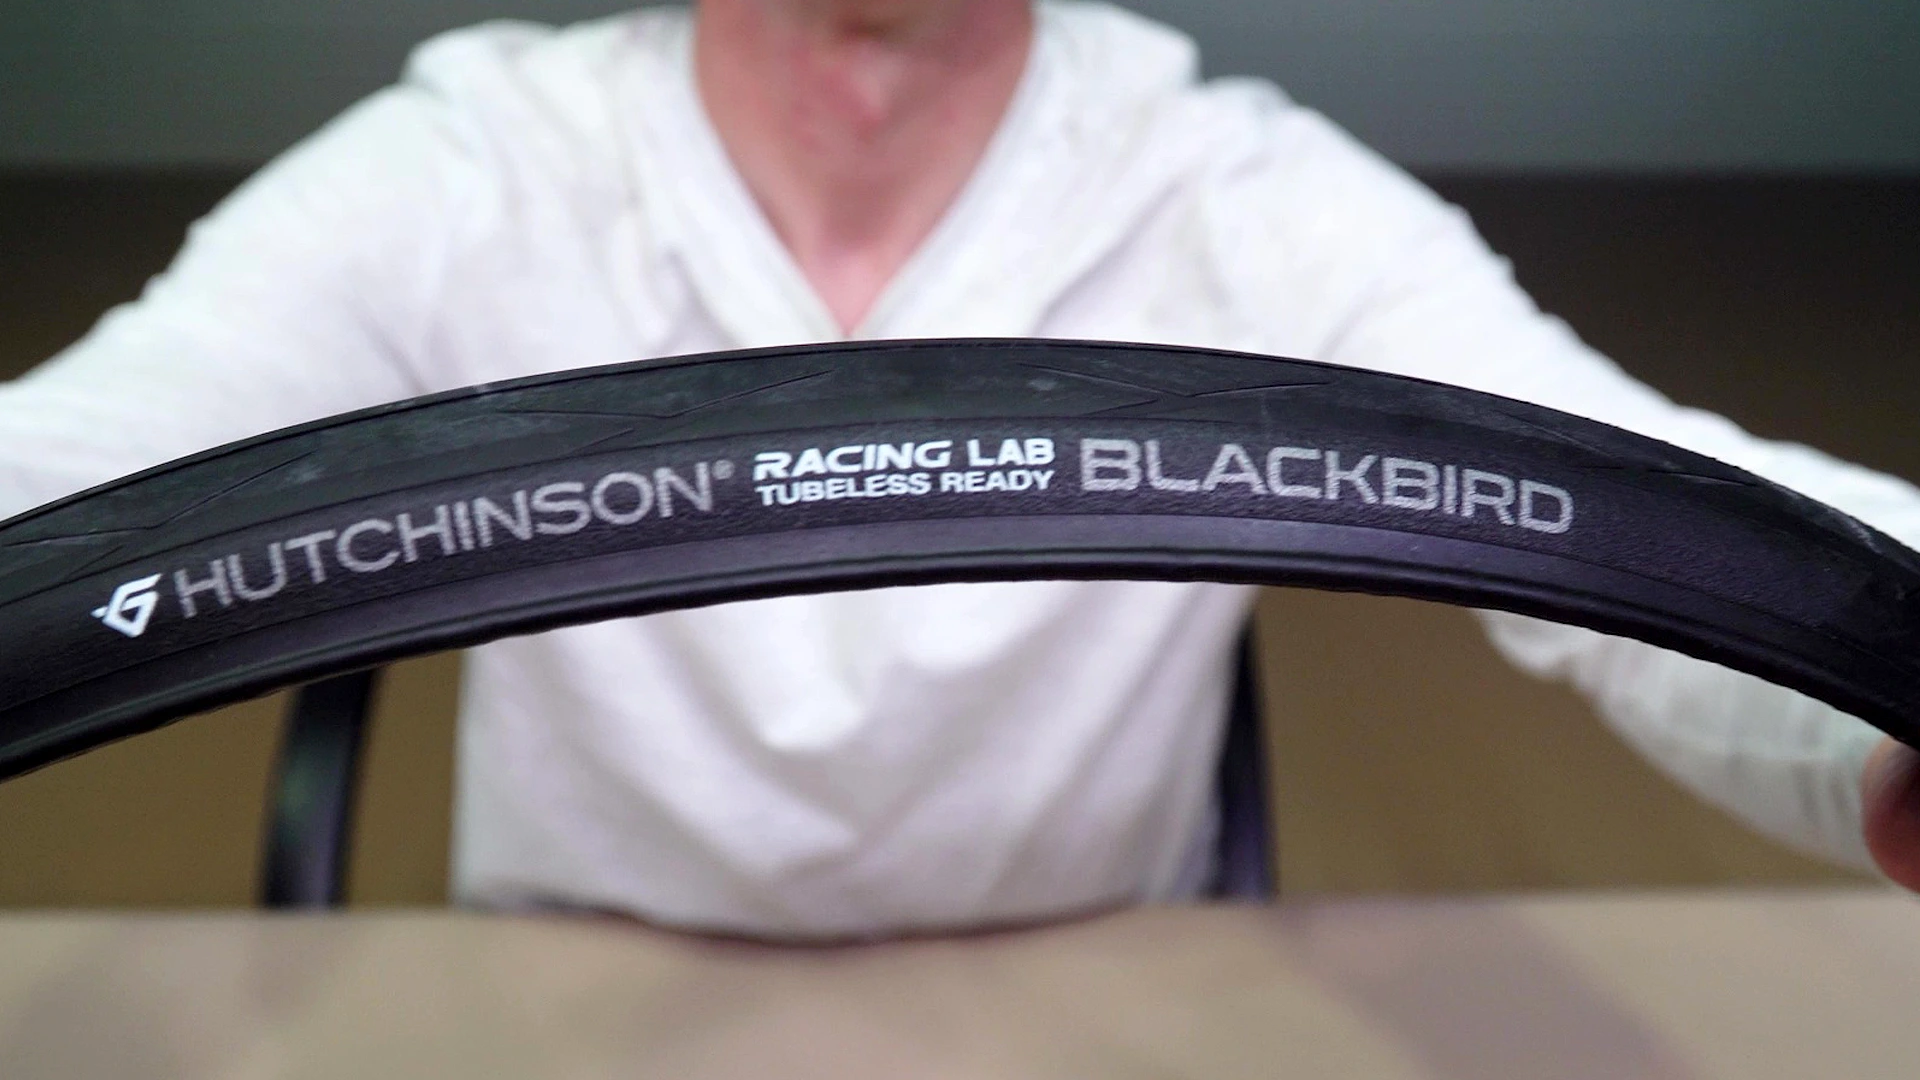 Probamos los nuevos neumáticos Hutchinson BlackBird Racing Lab Tubeless READY